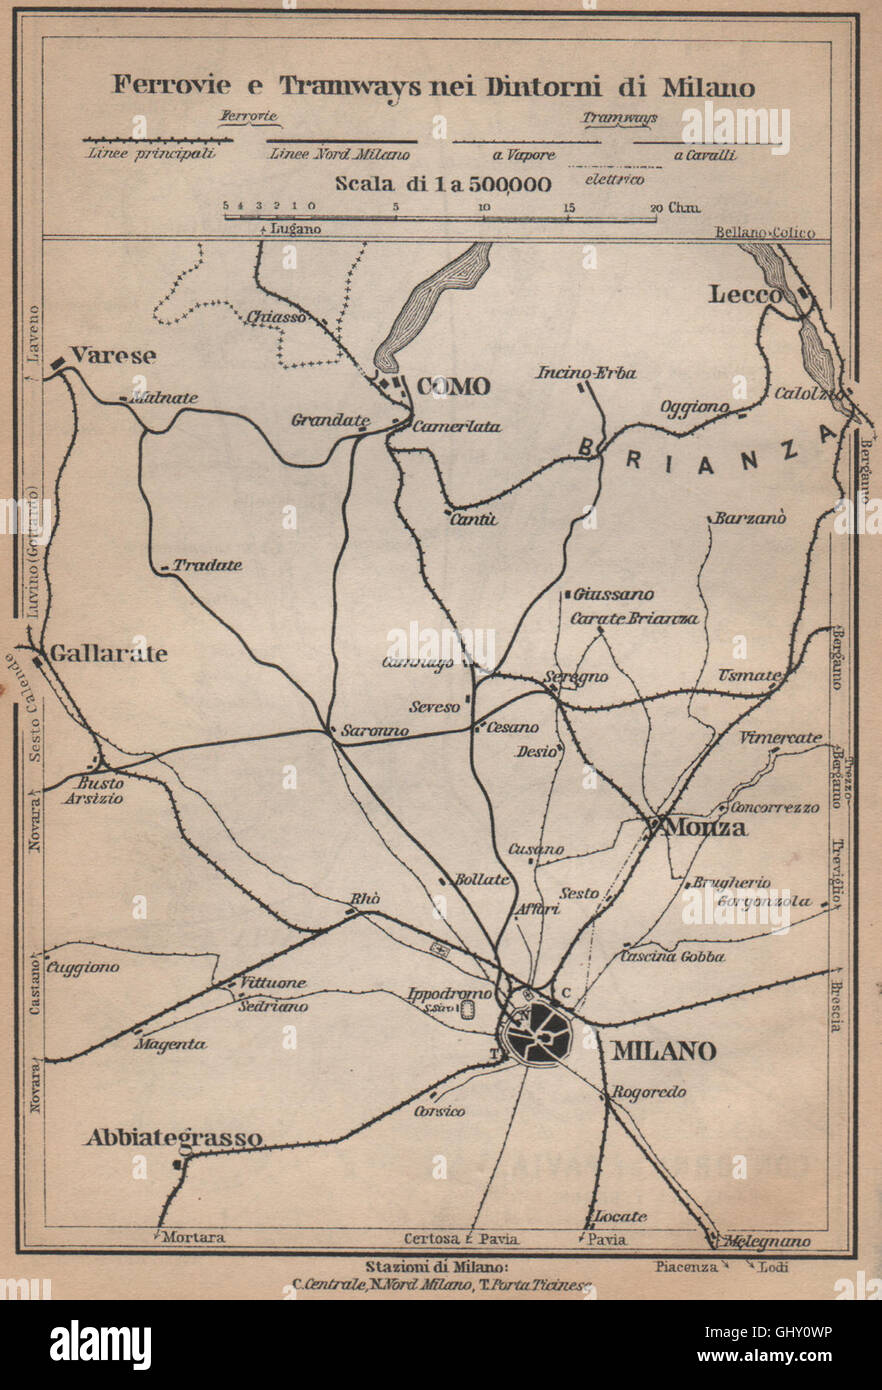 NEI DINTORNI TRAMWAYS FERROVIE E DI MILANO. Chemins de Côme, Lecco Monza 1895 map Banque D'Images